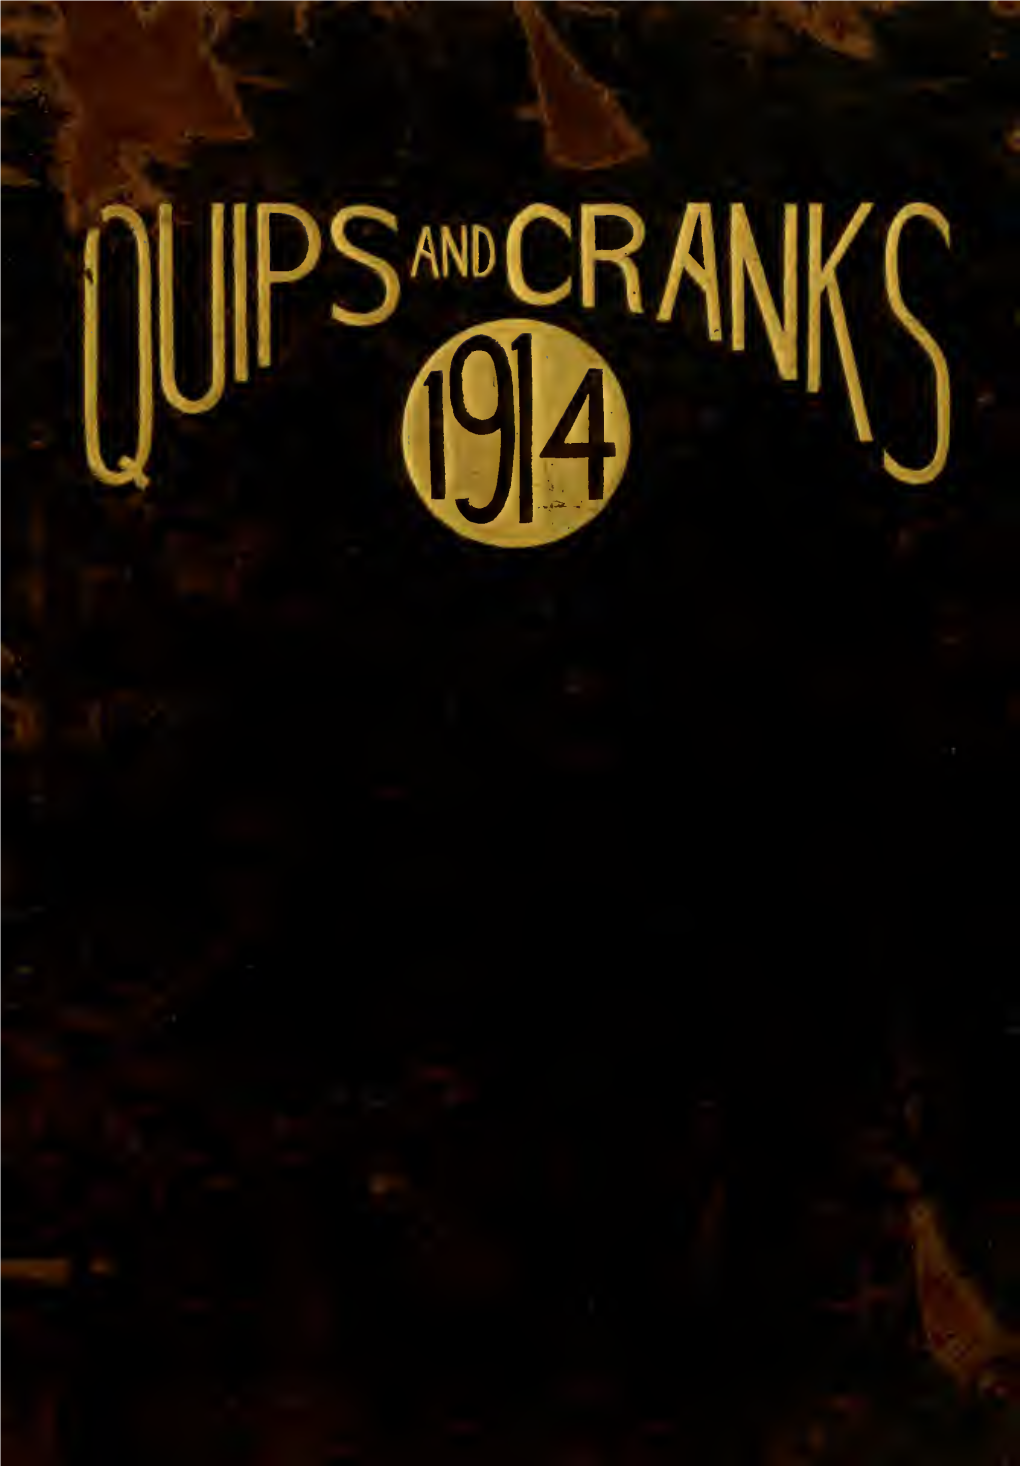 Davidson College Yearbook, Quips and Cranks, 1914